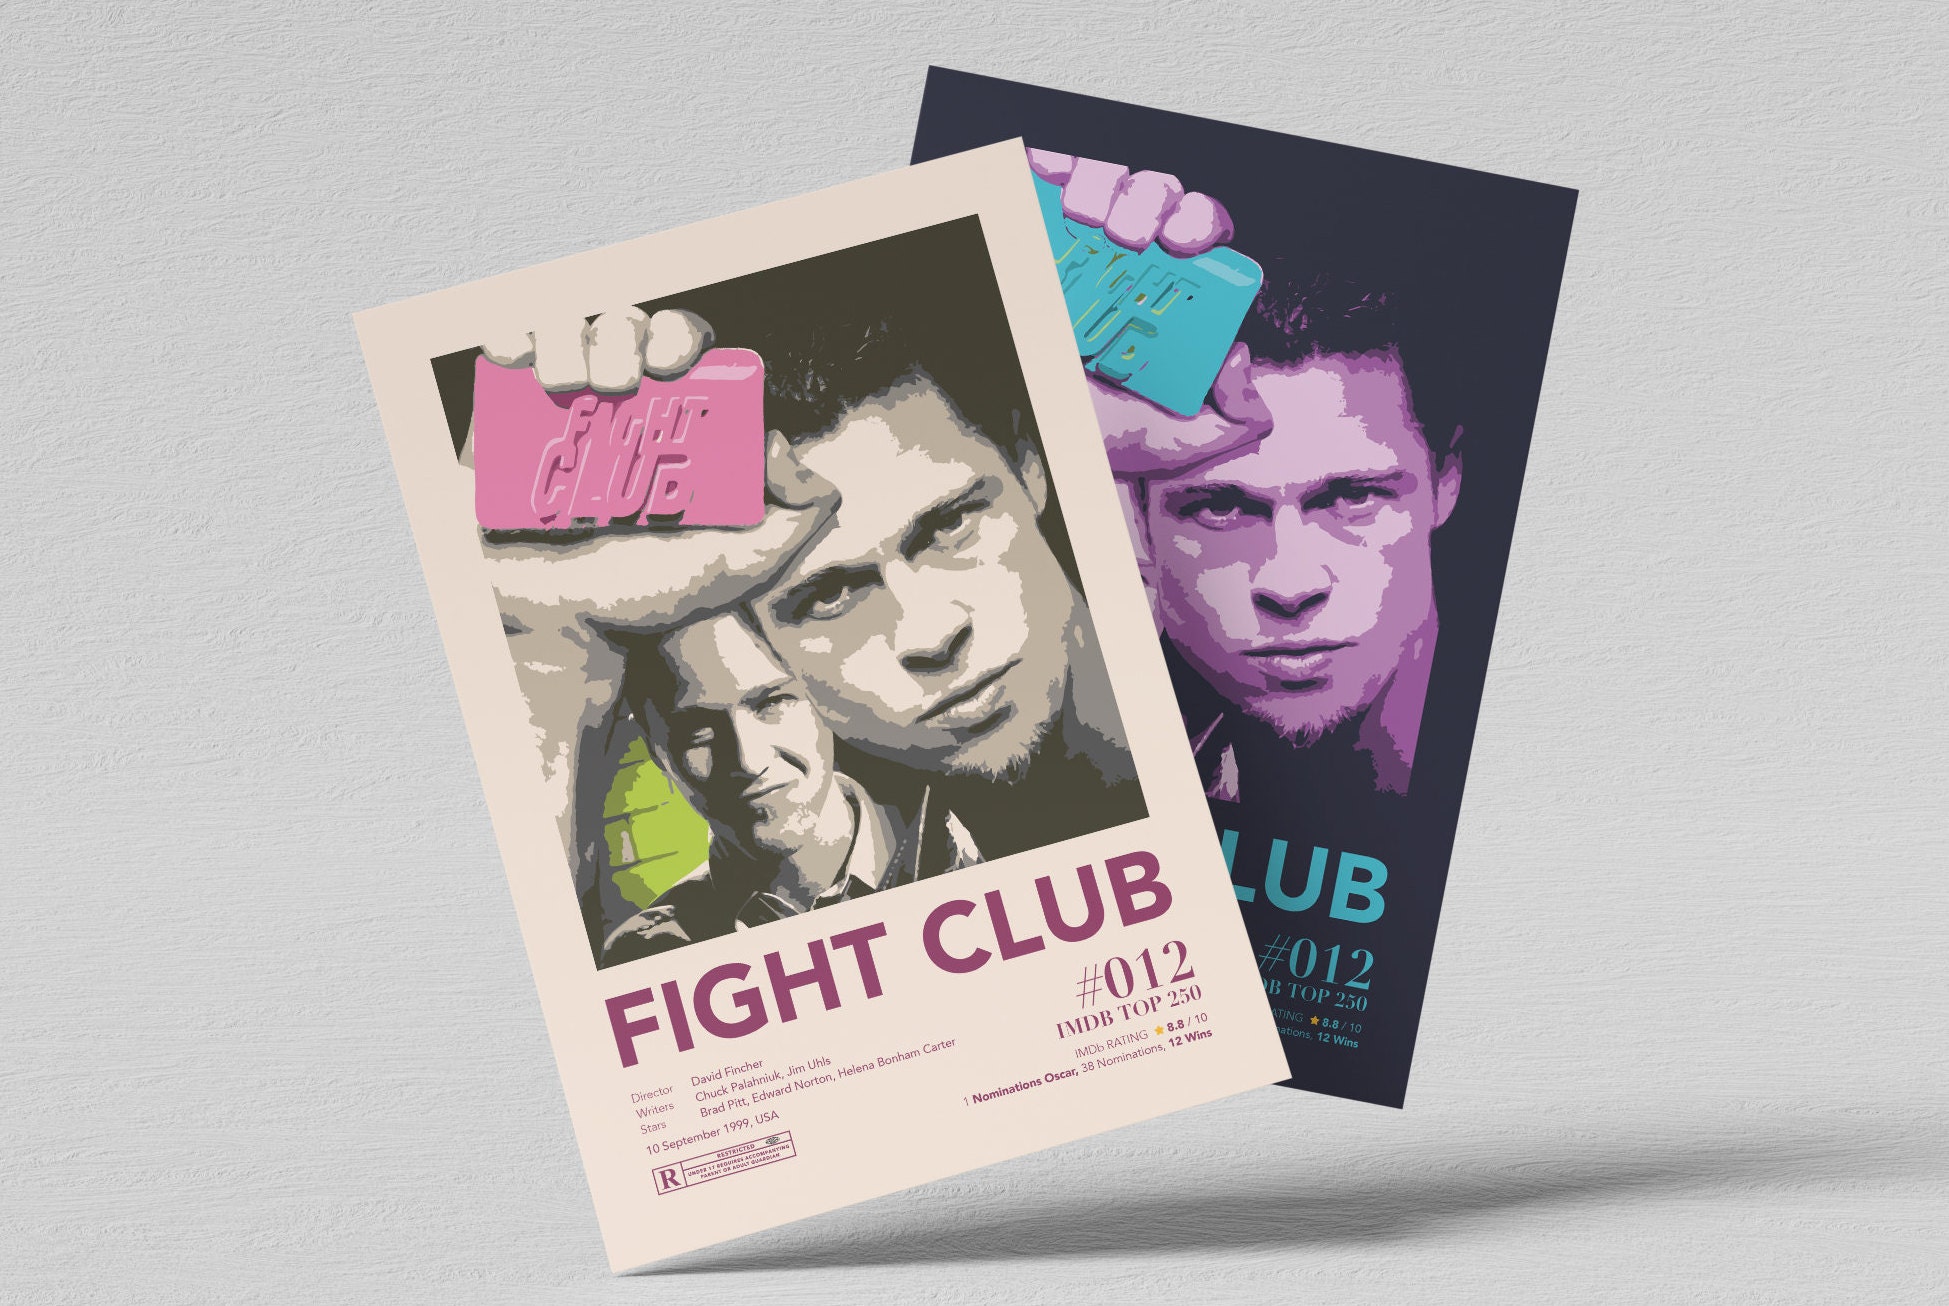 Fight Club (1999) - IMDb